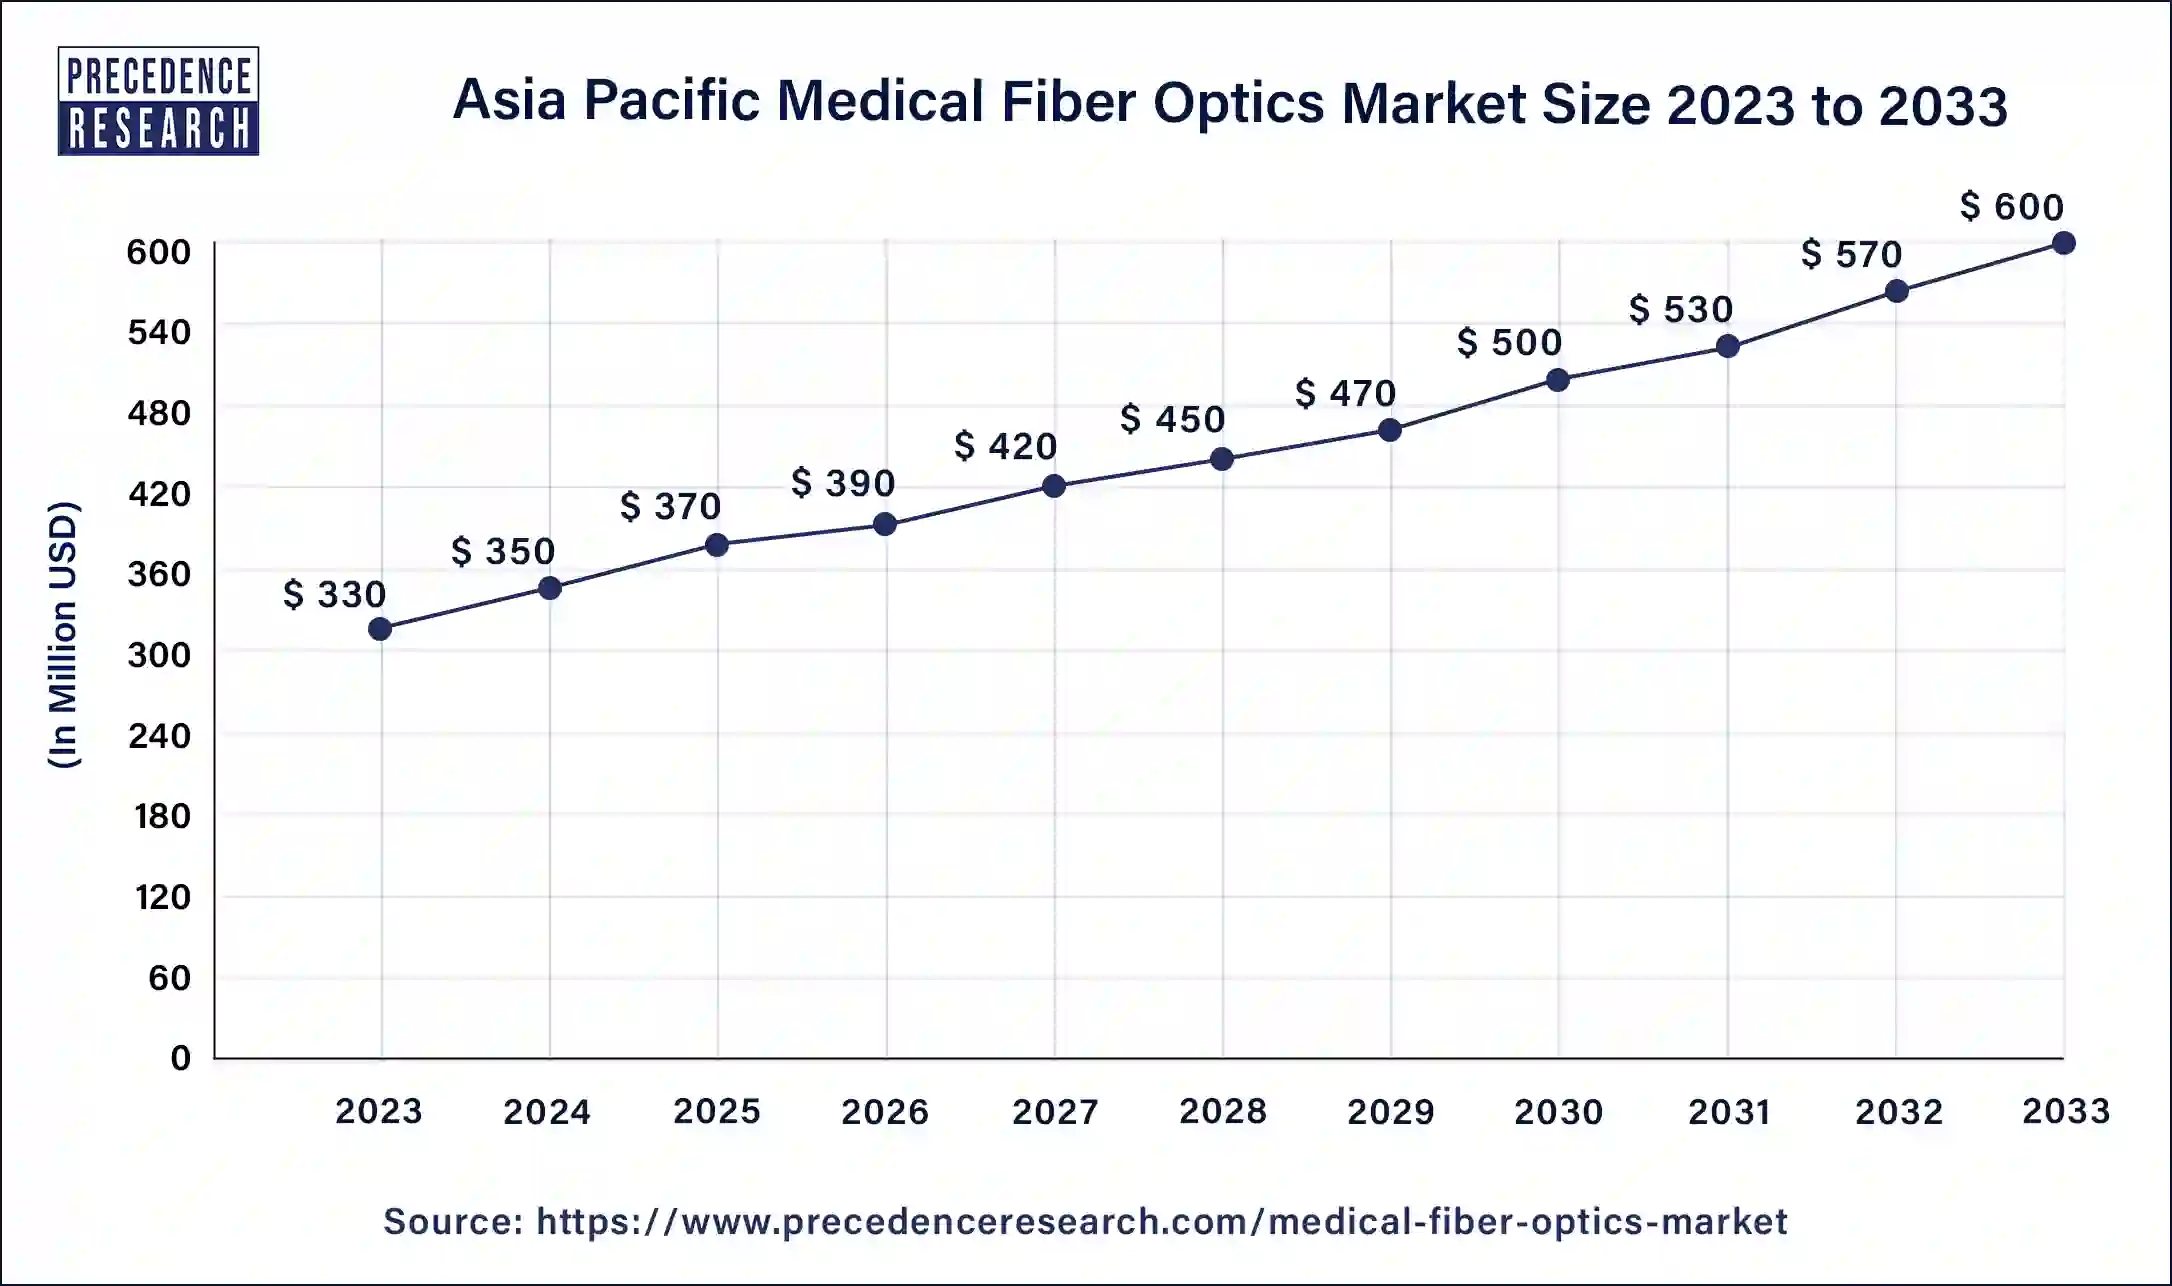 Asia Pacific Medical Fiber Optics Market Size 2024 to 2033